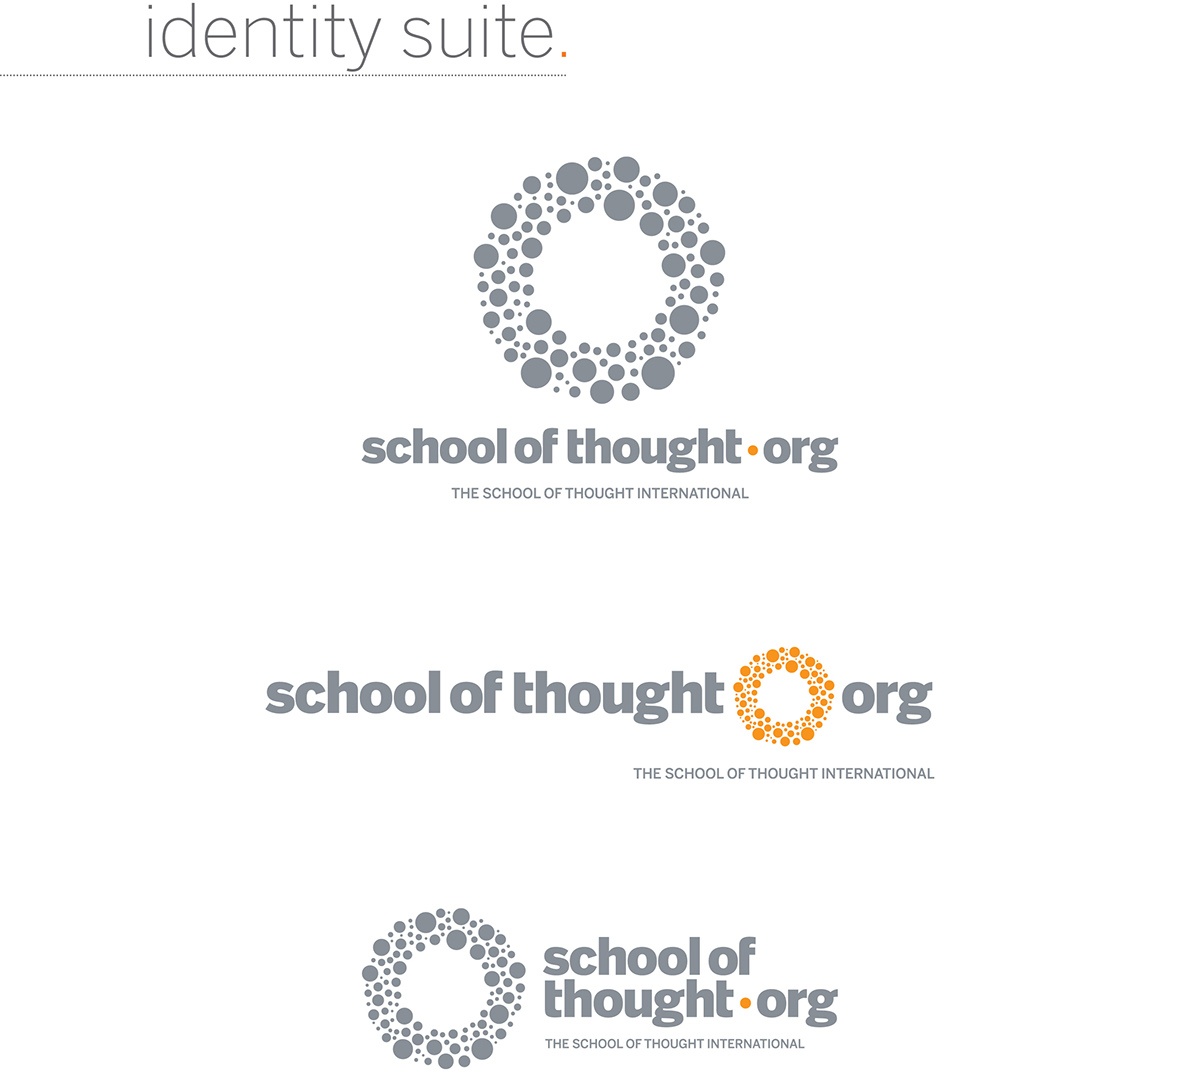 school of thought logo Education jesse richardson identity TEDx Brisbane TED talk International 3D